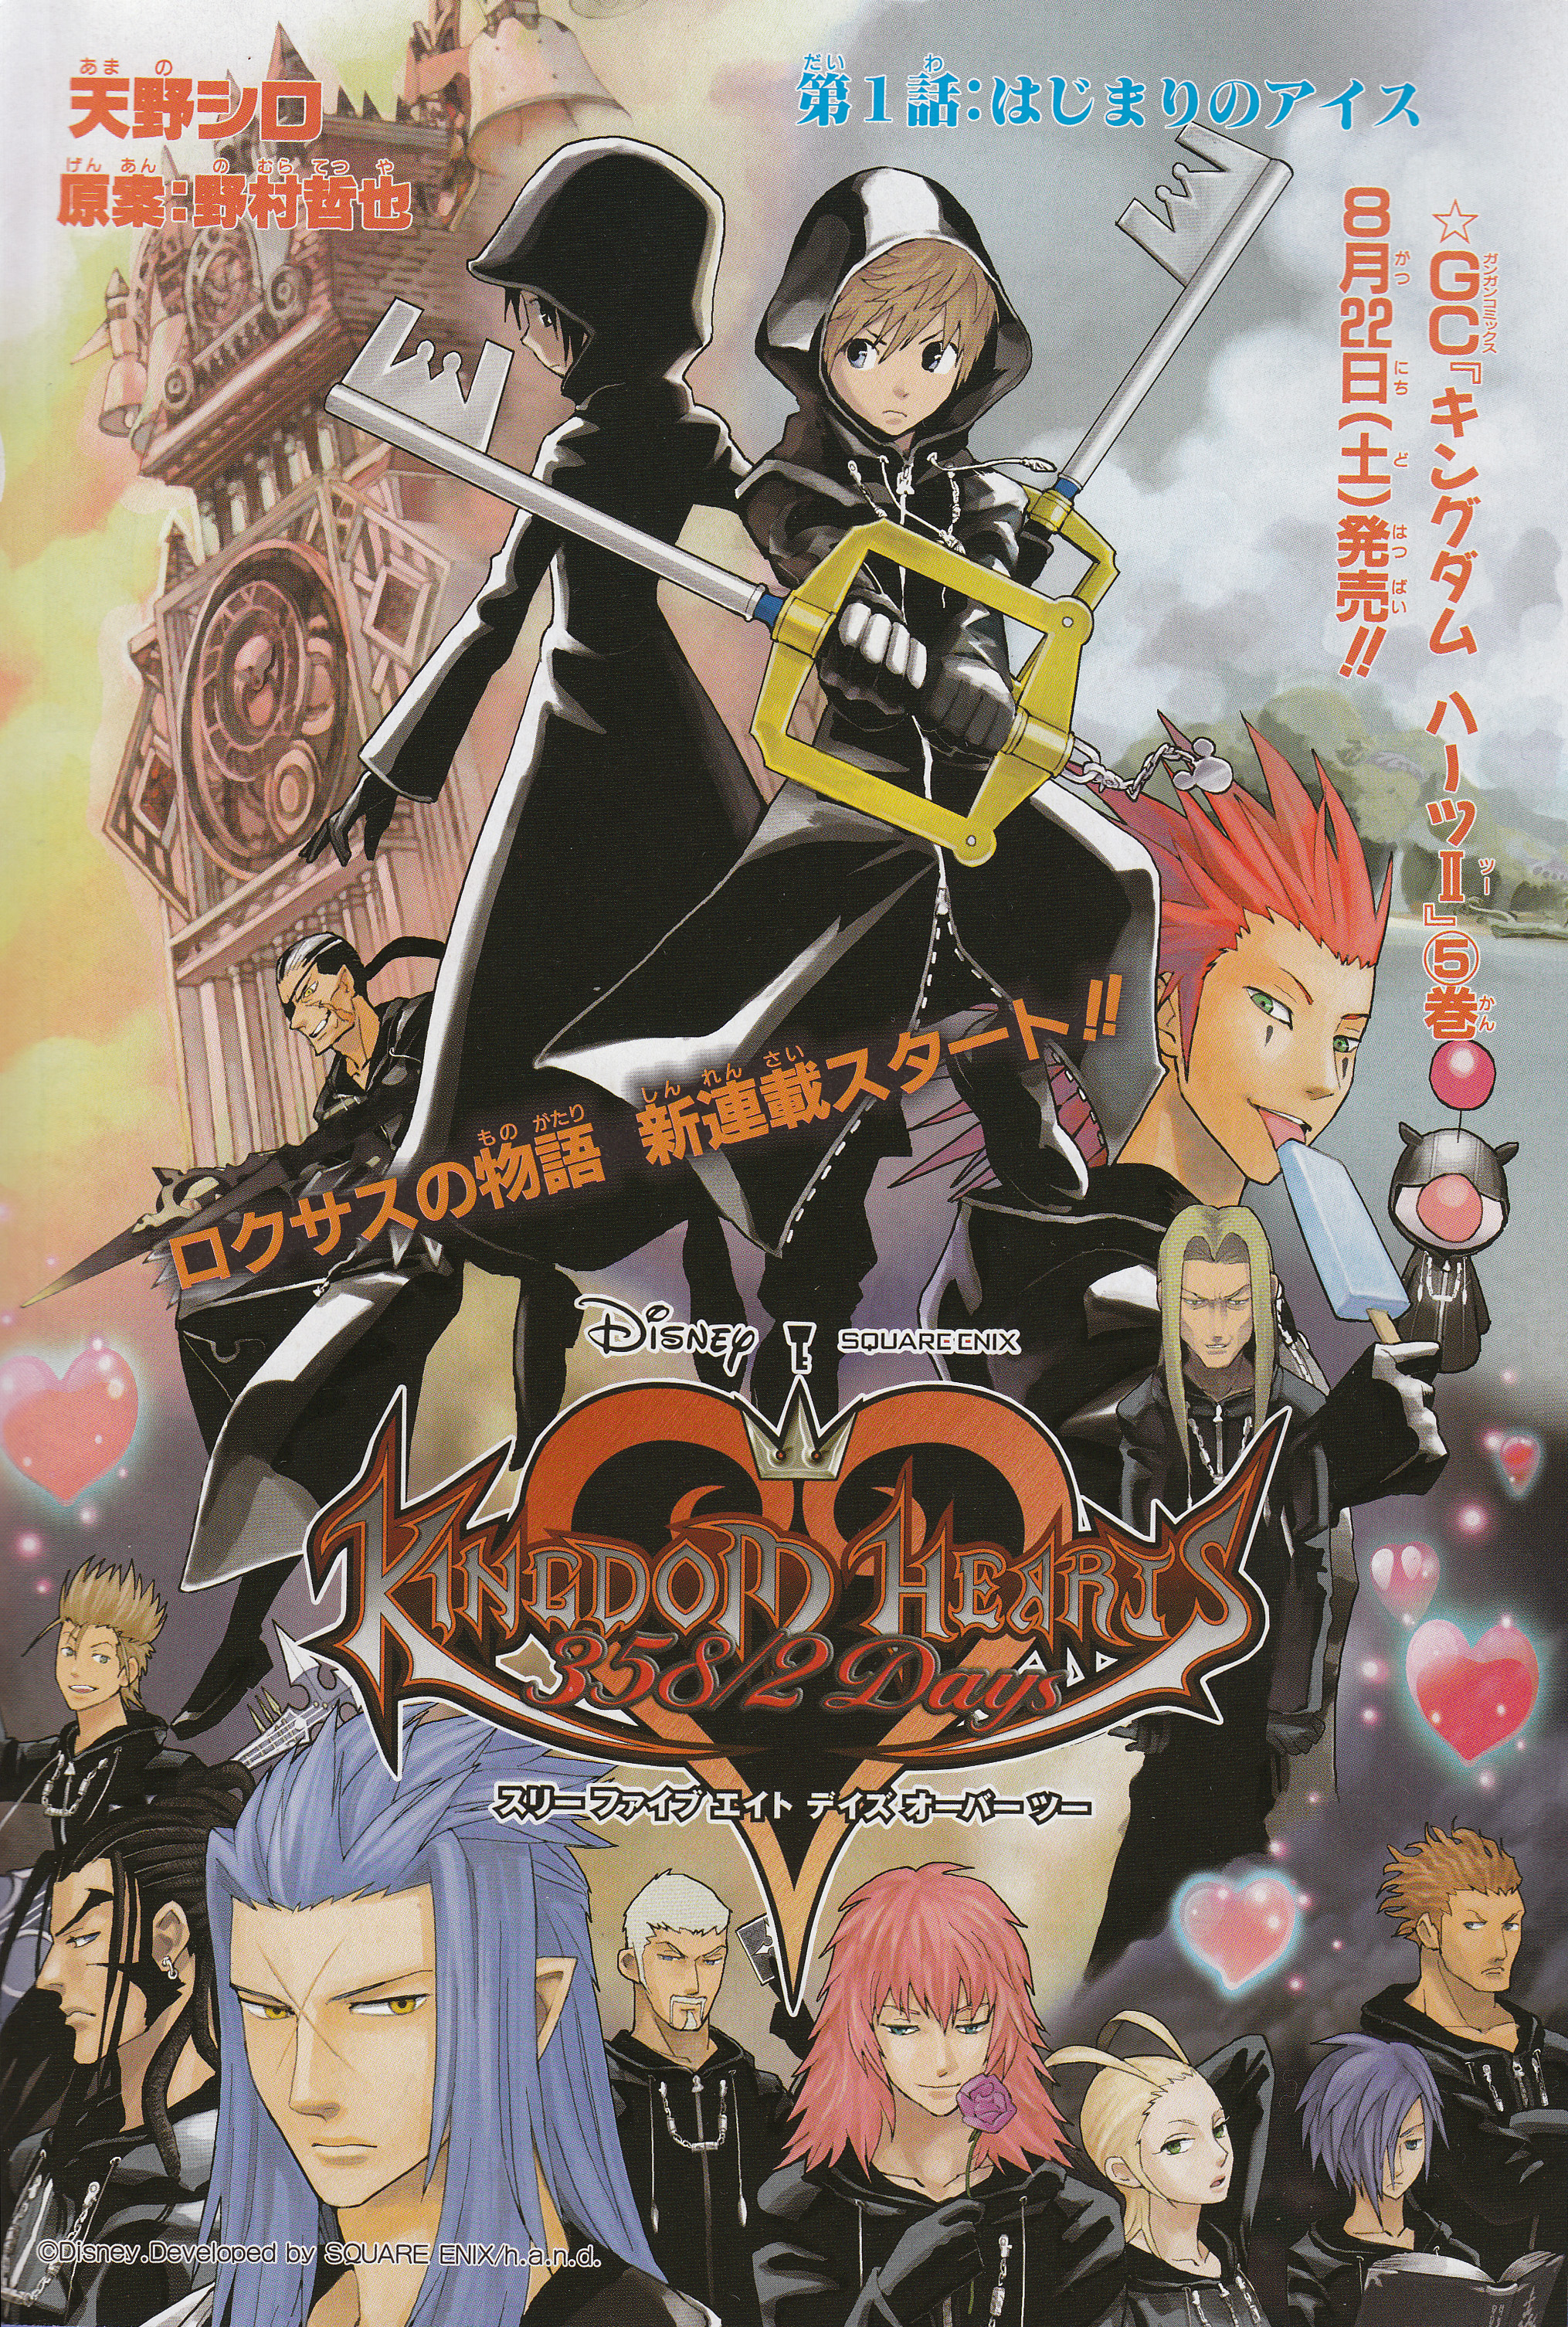 Kingdom Hearts 358/2 Days | Kingdom Hearts Manga Wikia Wiki | Fandom